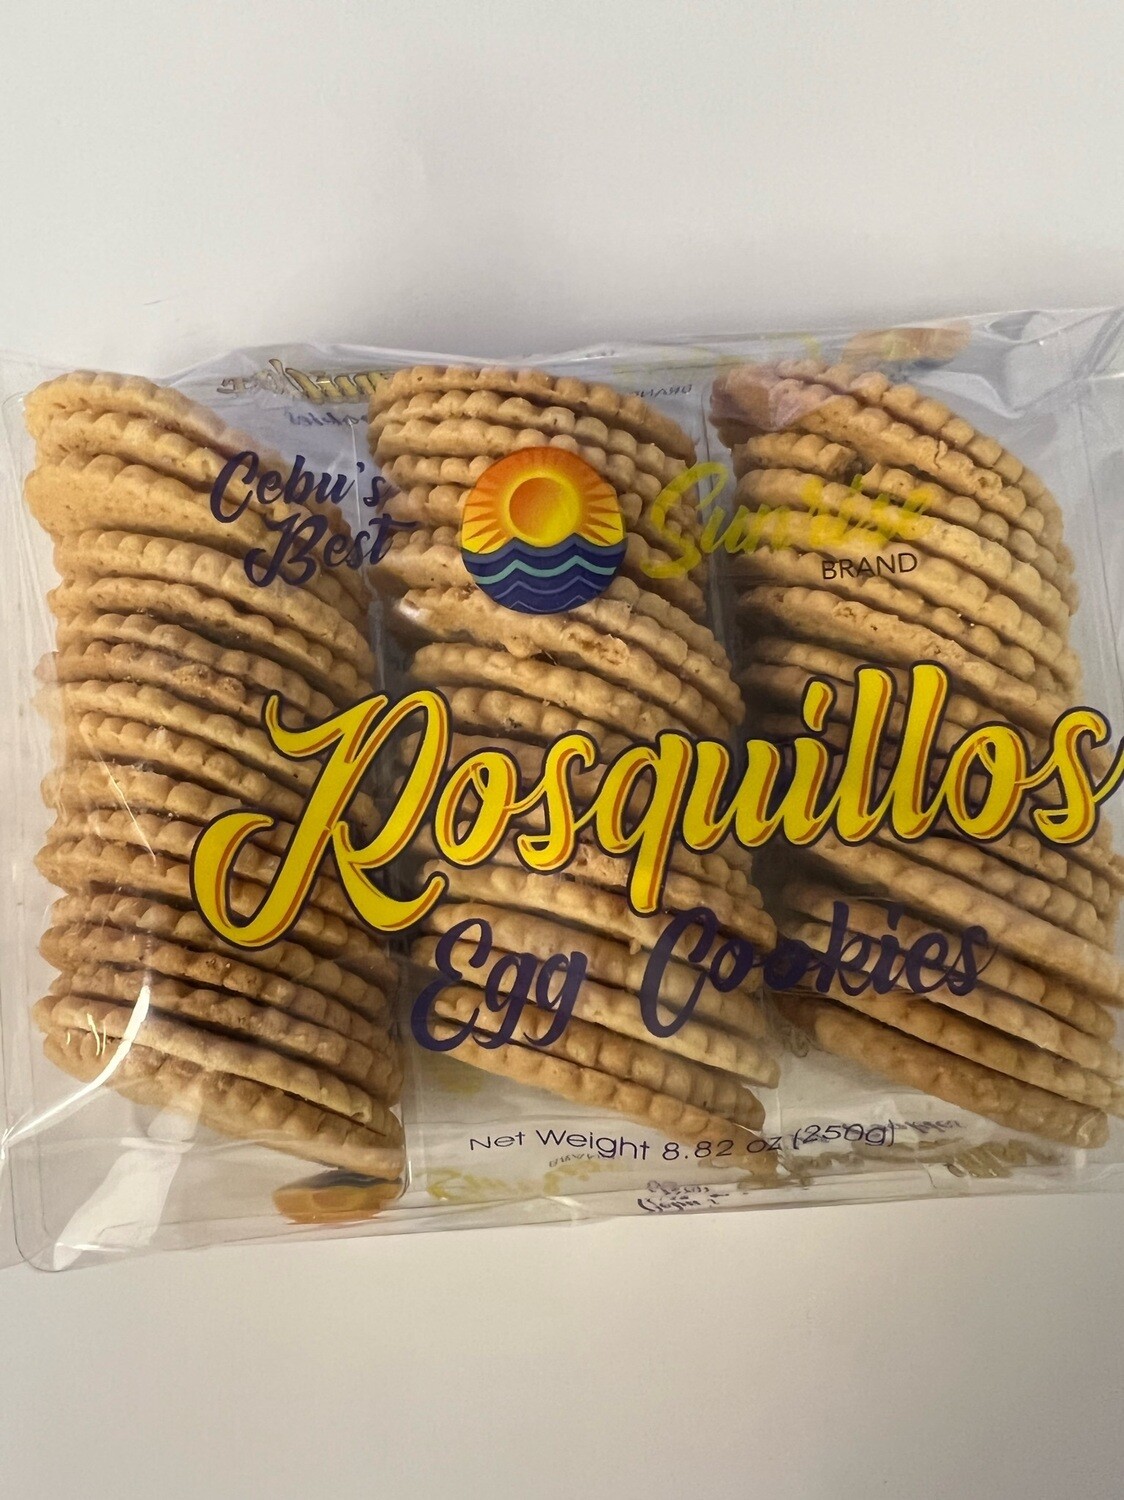 Cebu Best Rosquillos Egg Crackers